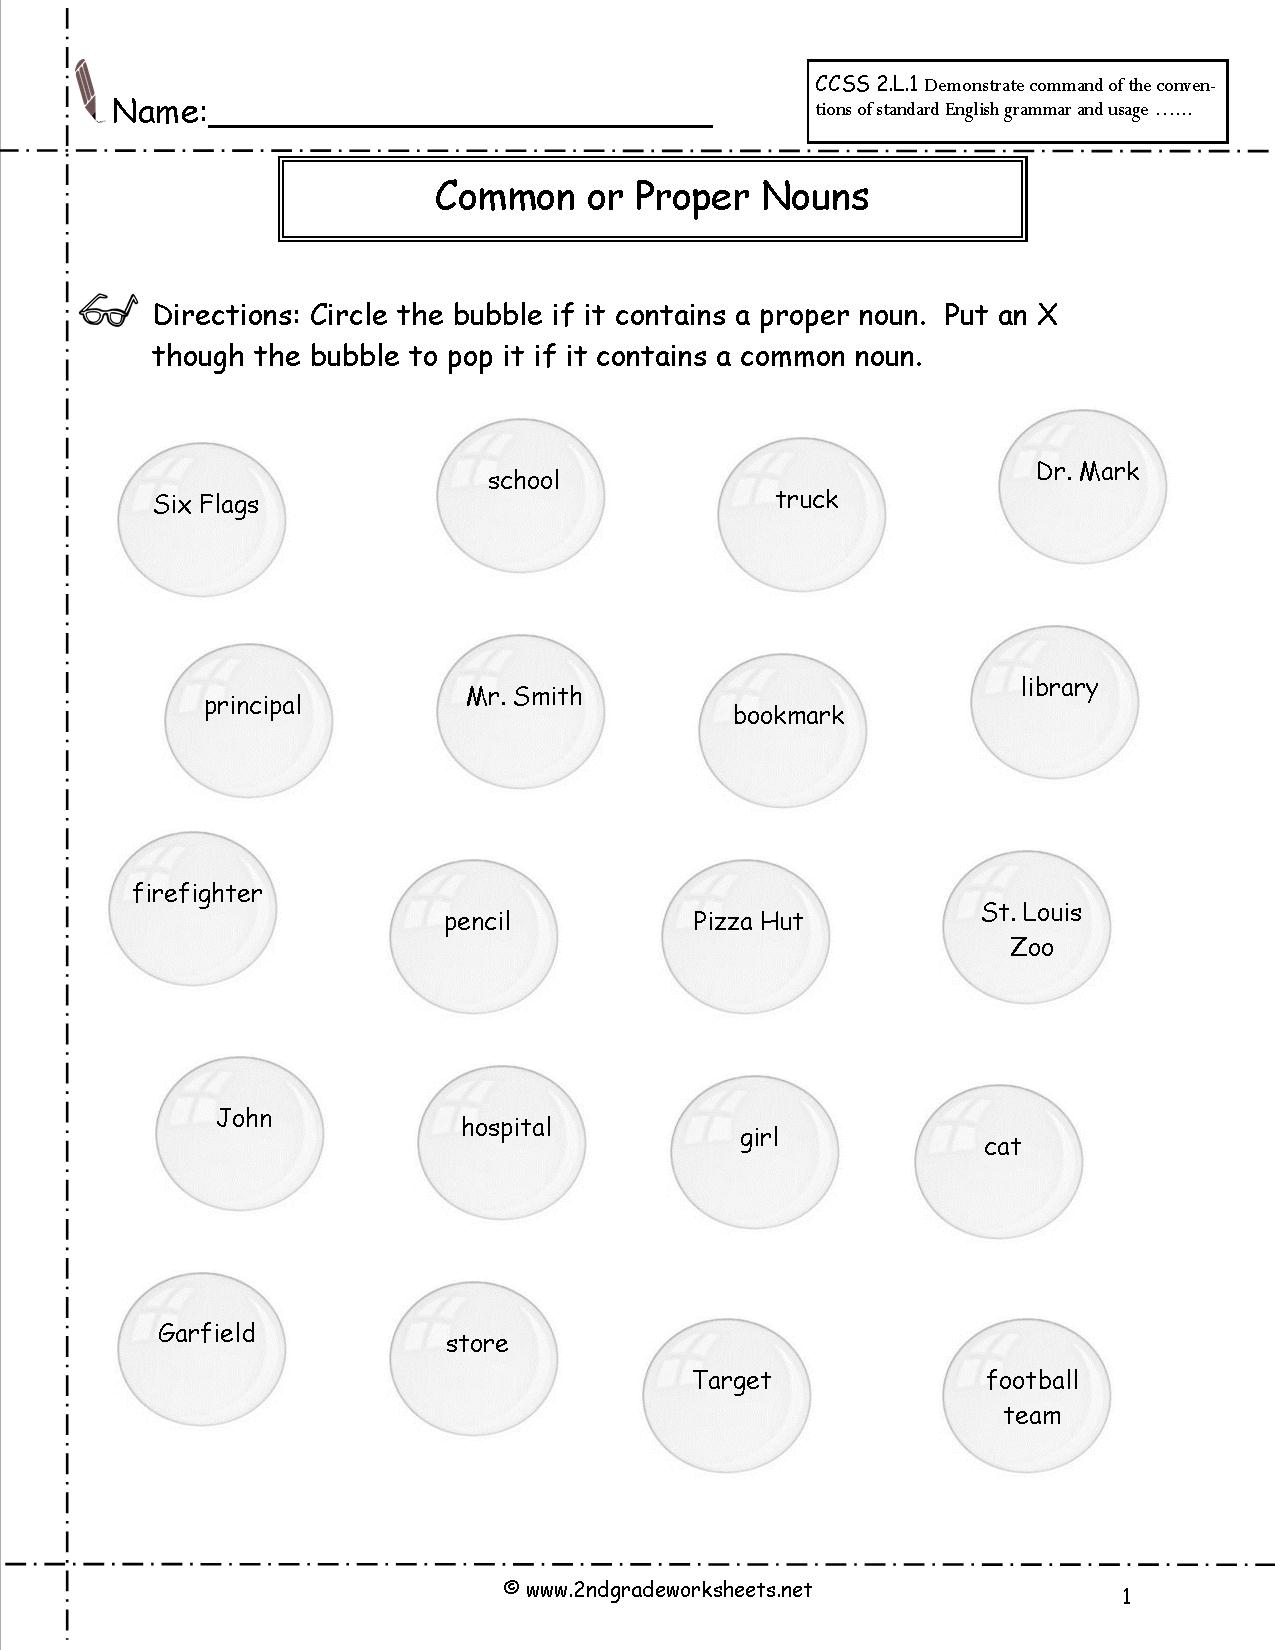 common-noun-and-proper-noun-worksheet-pdf-download-printables-worksheets-digital-art